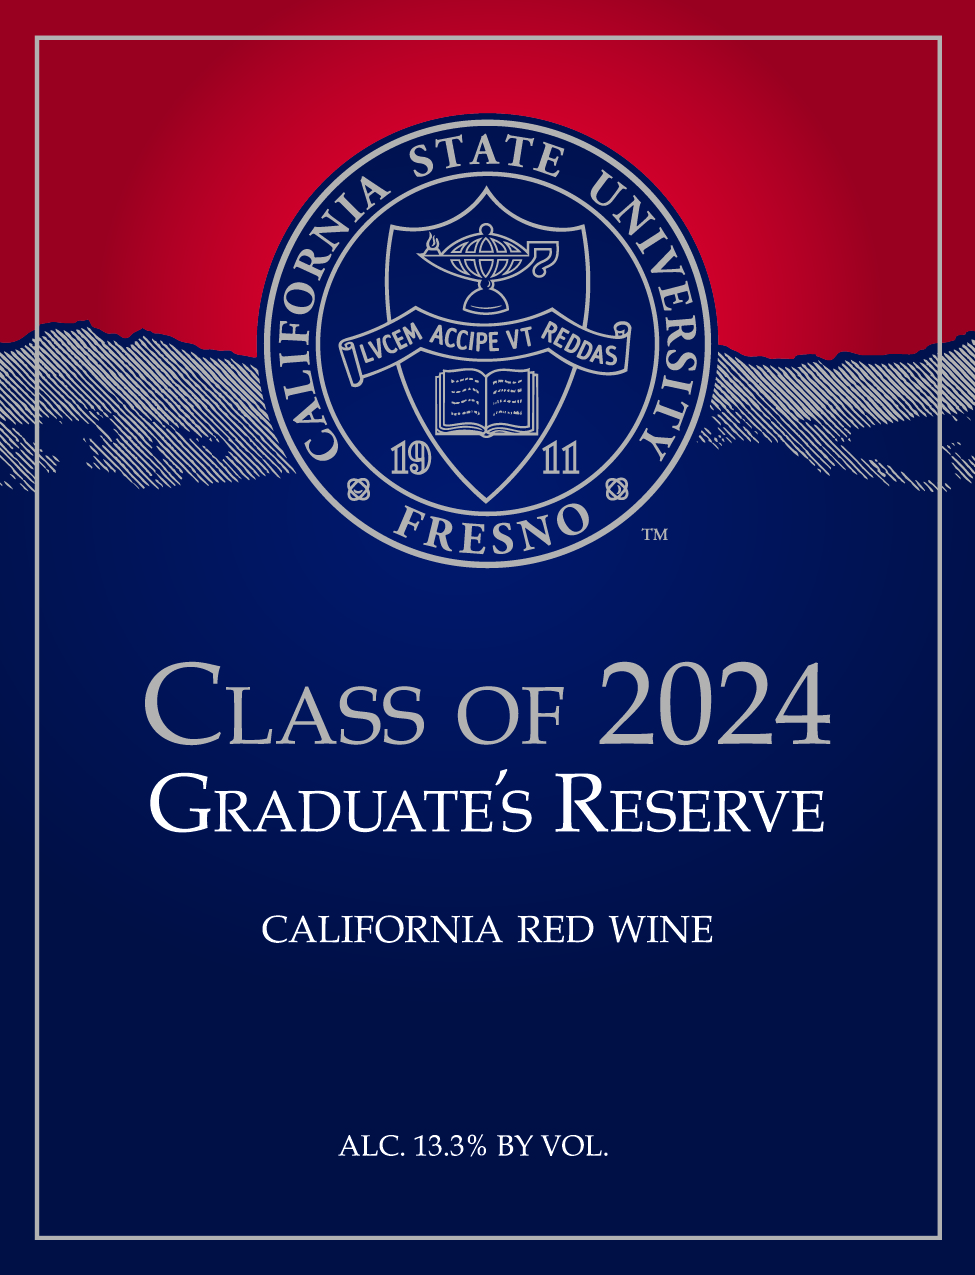 Fresno State Winery Graduate Reserve 2024 label